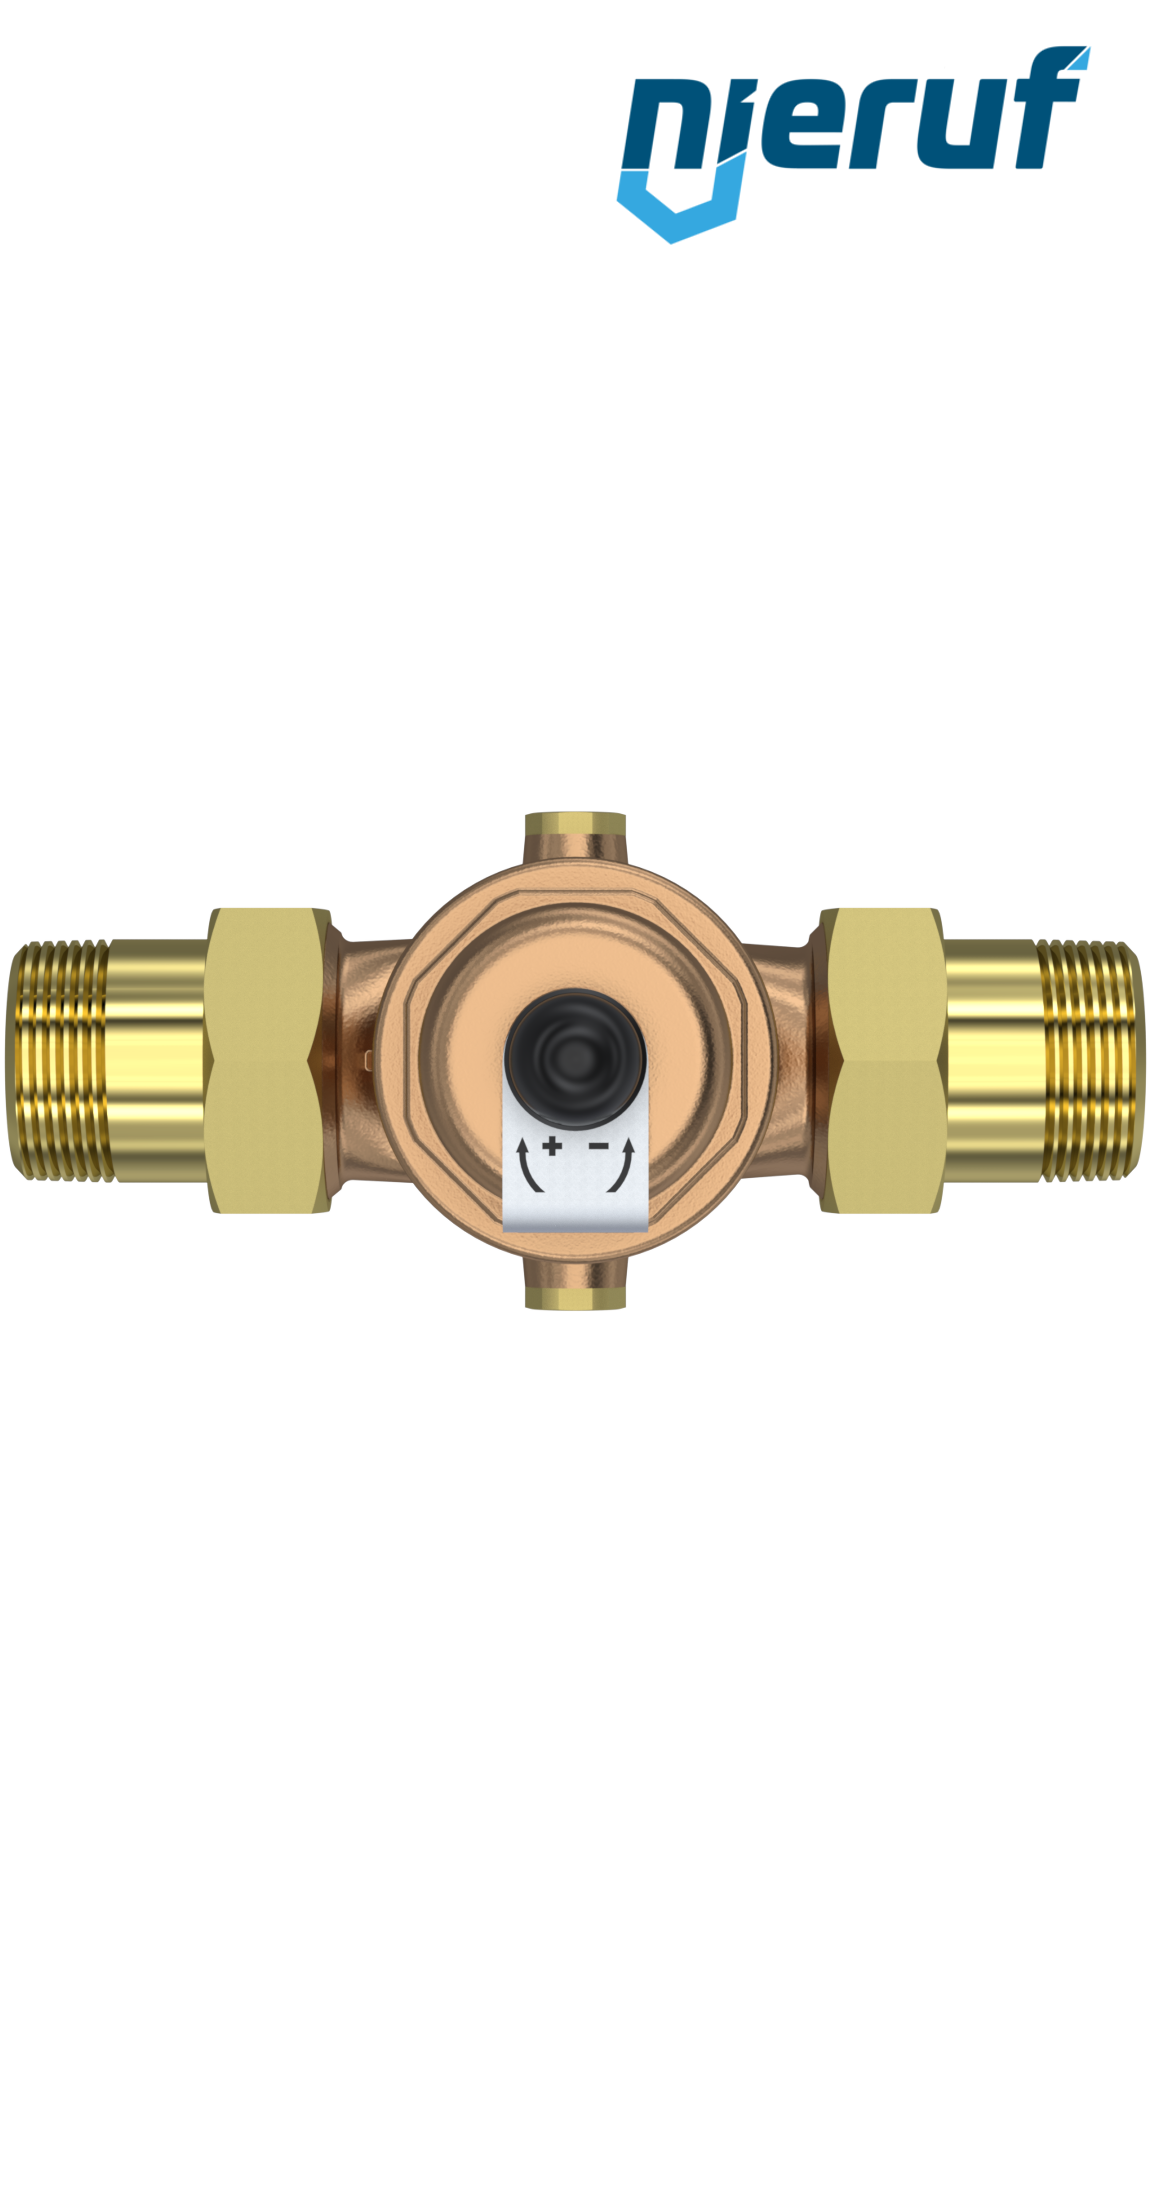 pressure reducing valve 1/2" inch male thread DM02 gunmetal FKM 5.0 - 15.0 bar